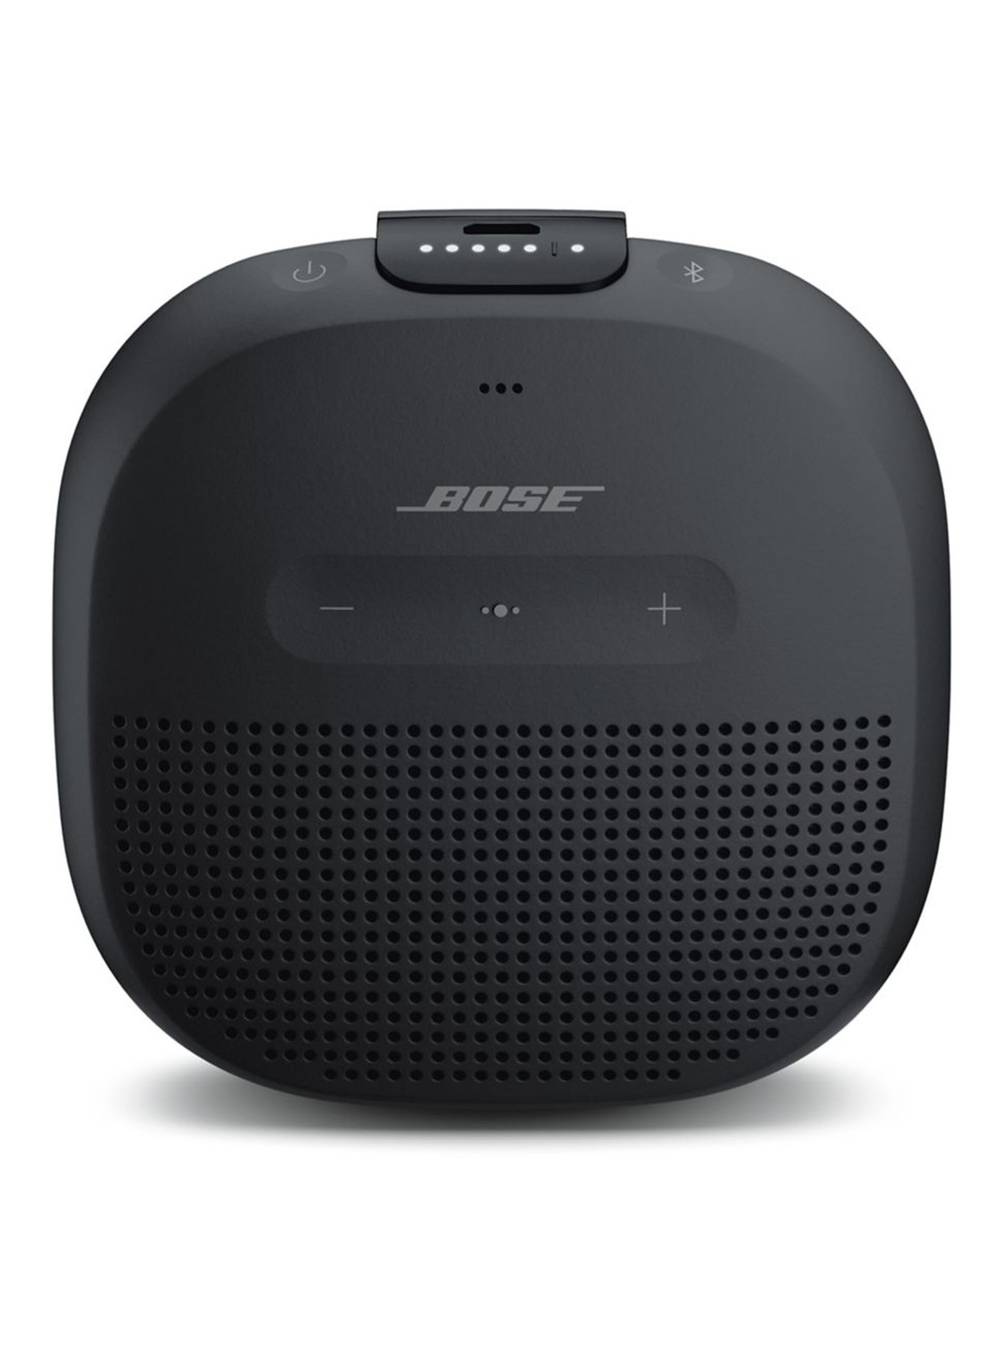 Bose parlante portátil  soundlink micro - bluetooth - color negro (1 un)